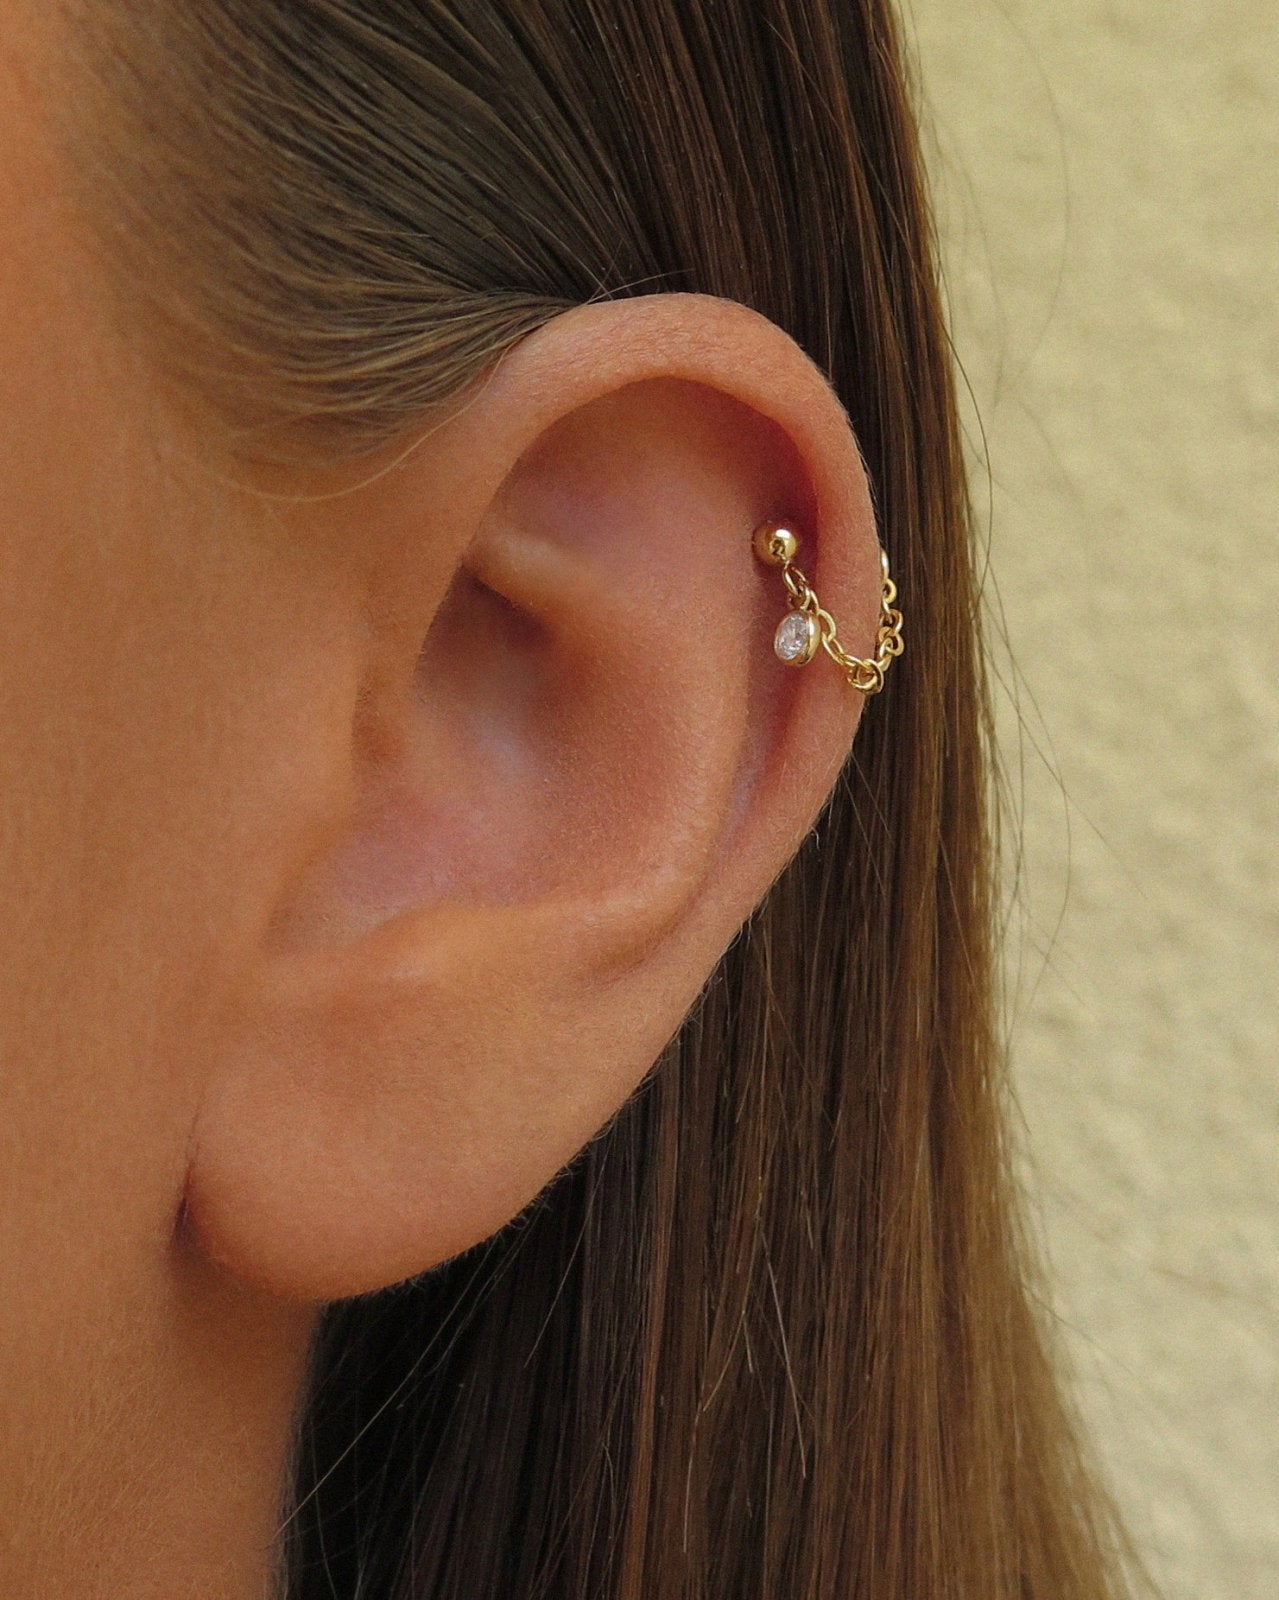 Buy Tiny Helix Piercing, Helix Earring Hoop, Cartilage Hoop, Helix Earring  Online in India - Etsy